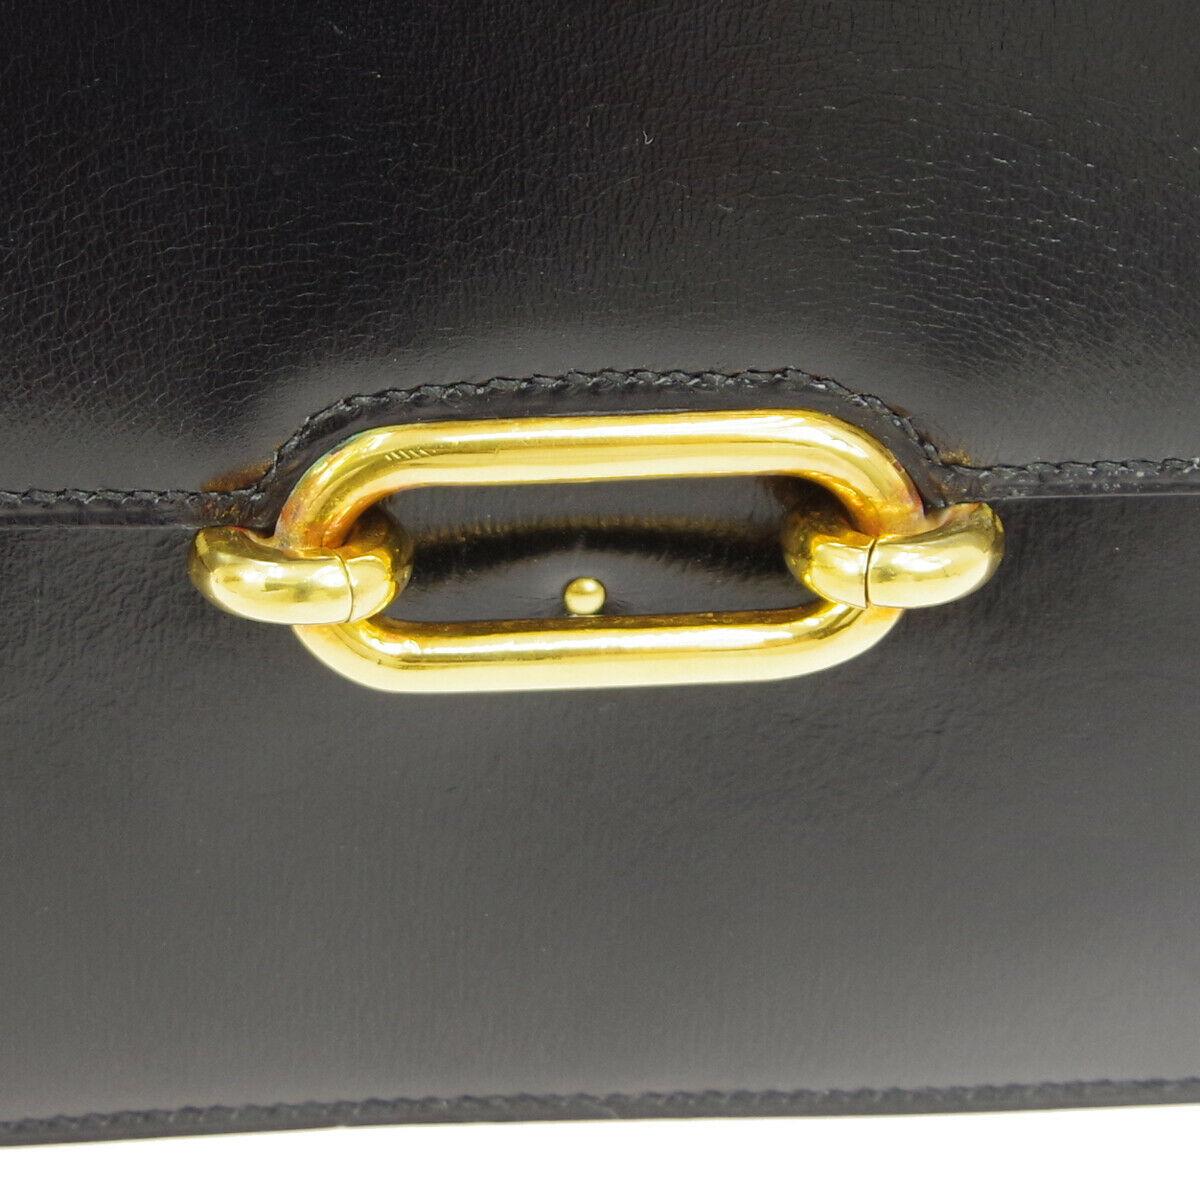 Leather
Gold tone hardware
Snap hook closure
Leather lining
Made in France
Adjustable shoulder drop 8.25